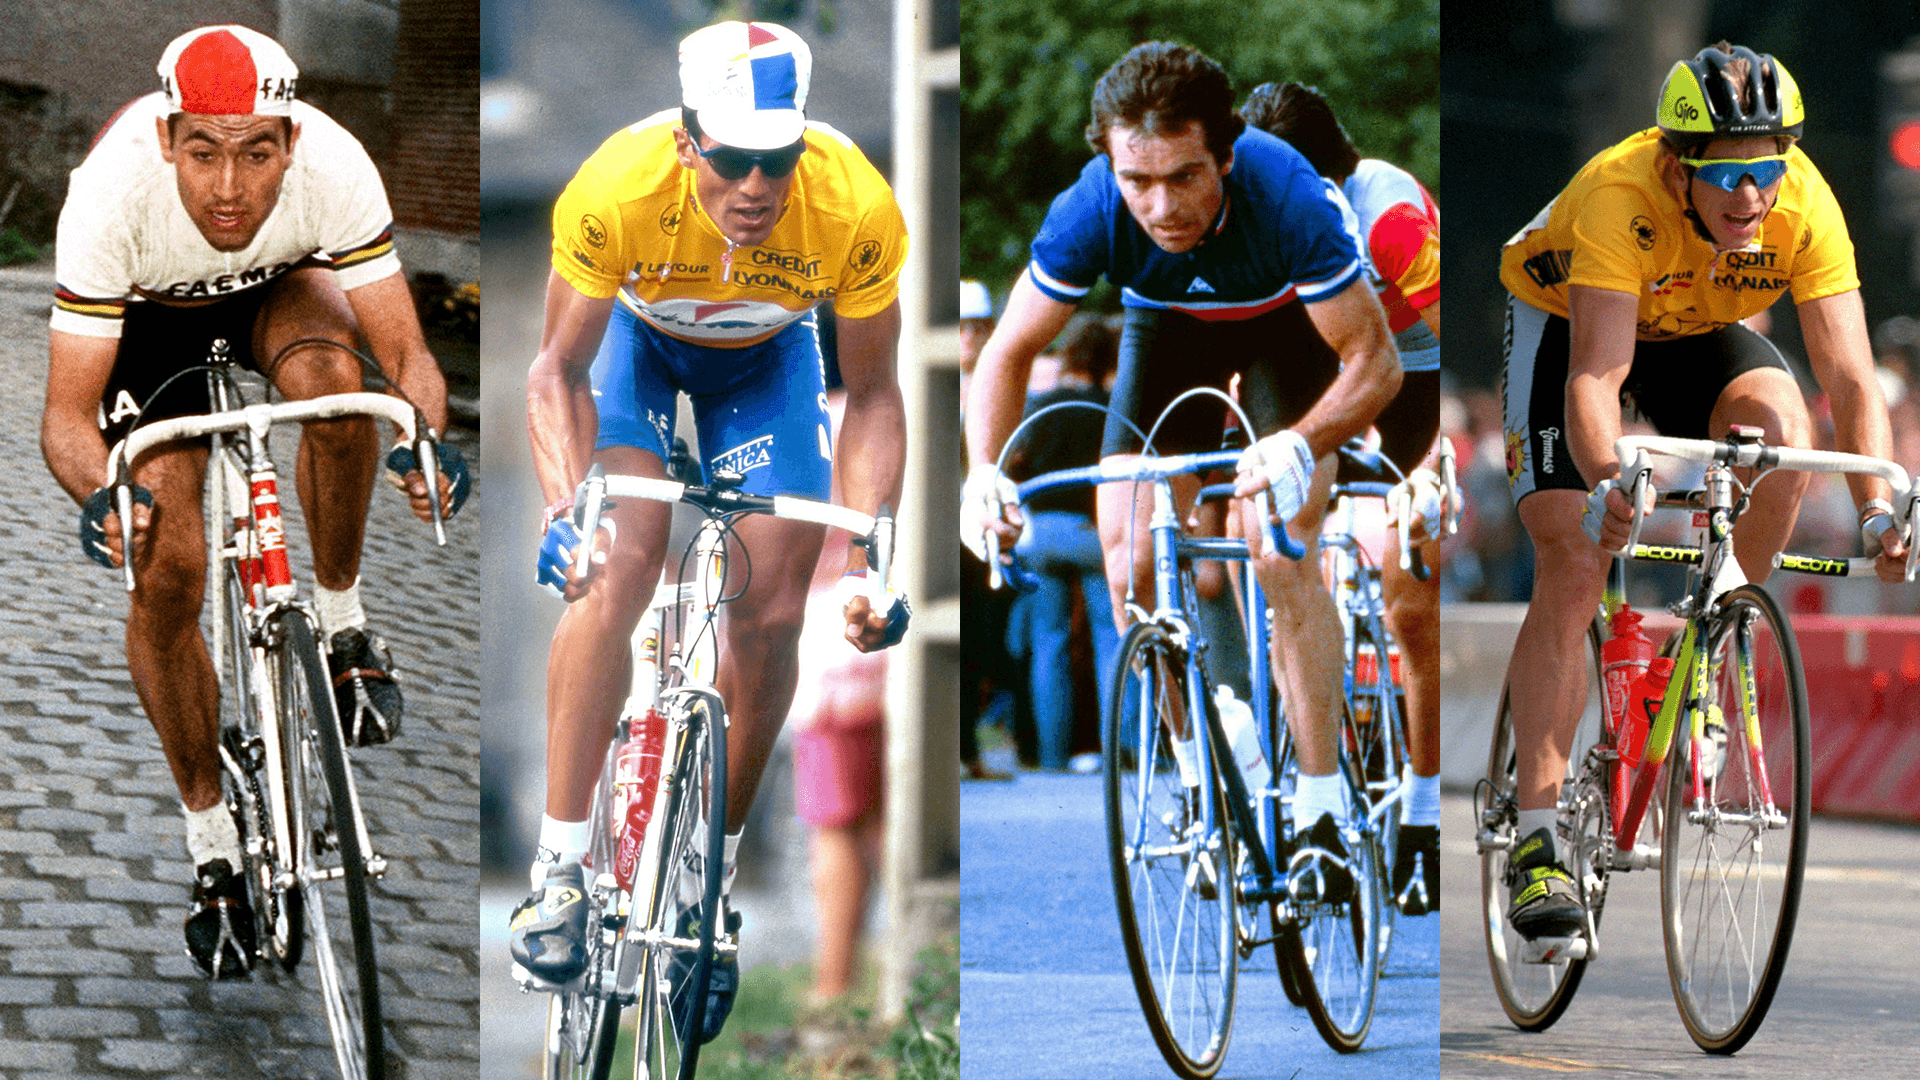 Top 10: Tour de France riders | Cycling